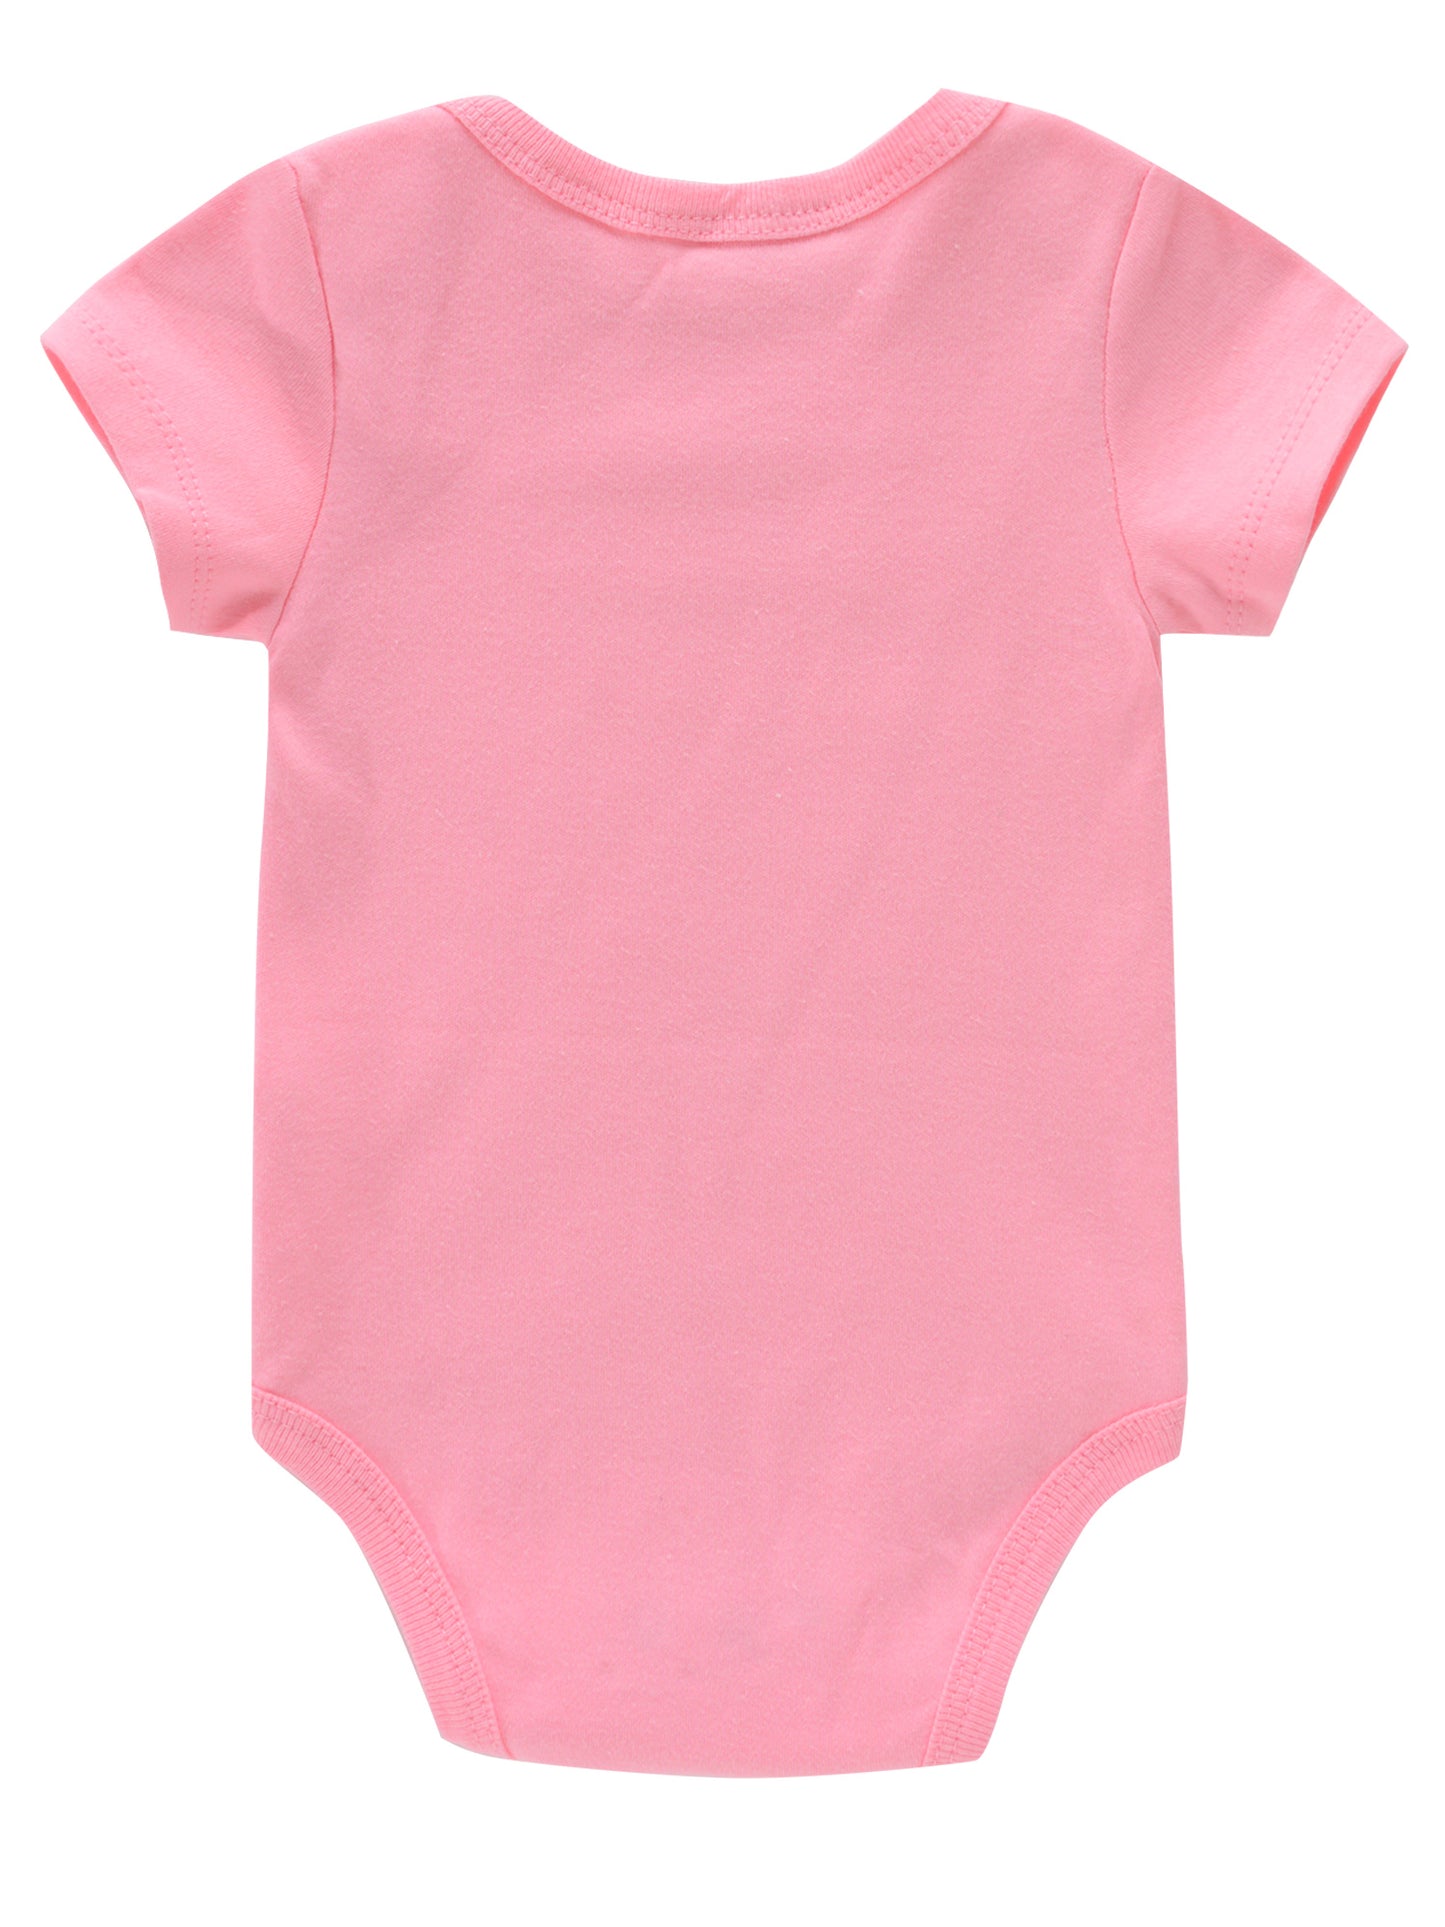 Newborn Infant Romper Letter Print Short Sleeve Round Neck Bodysuit For Baby Girls Toddler Clothes